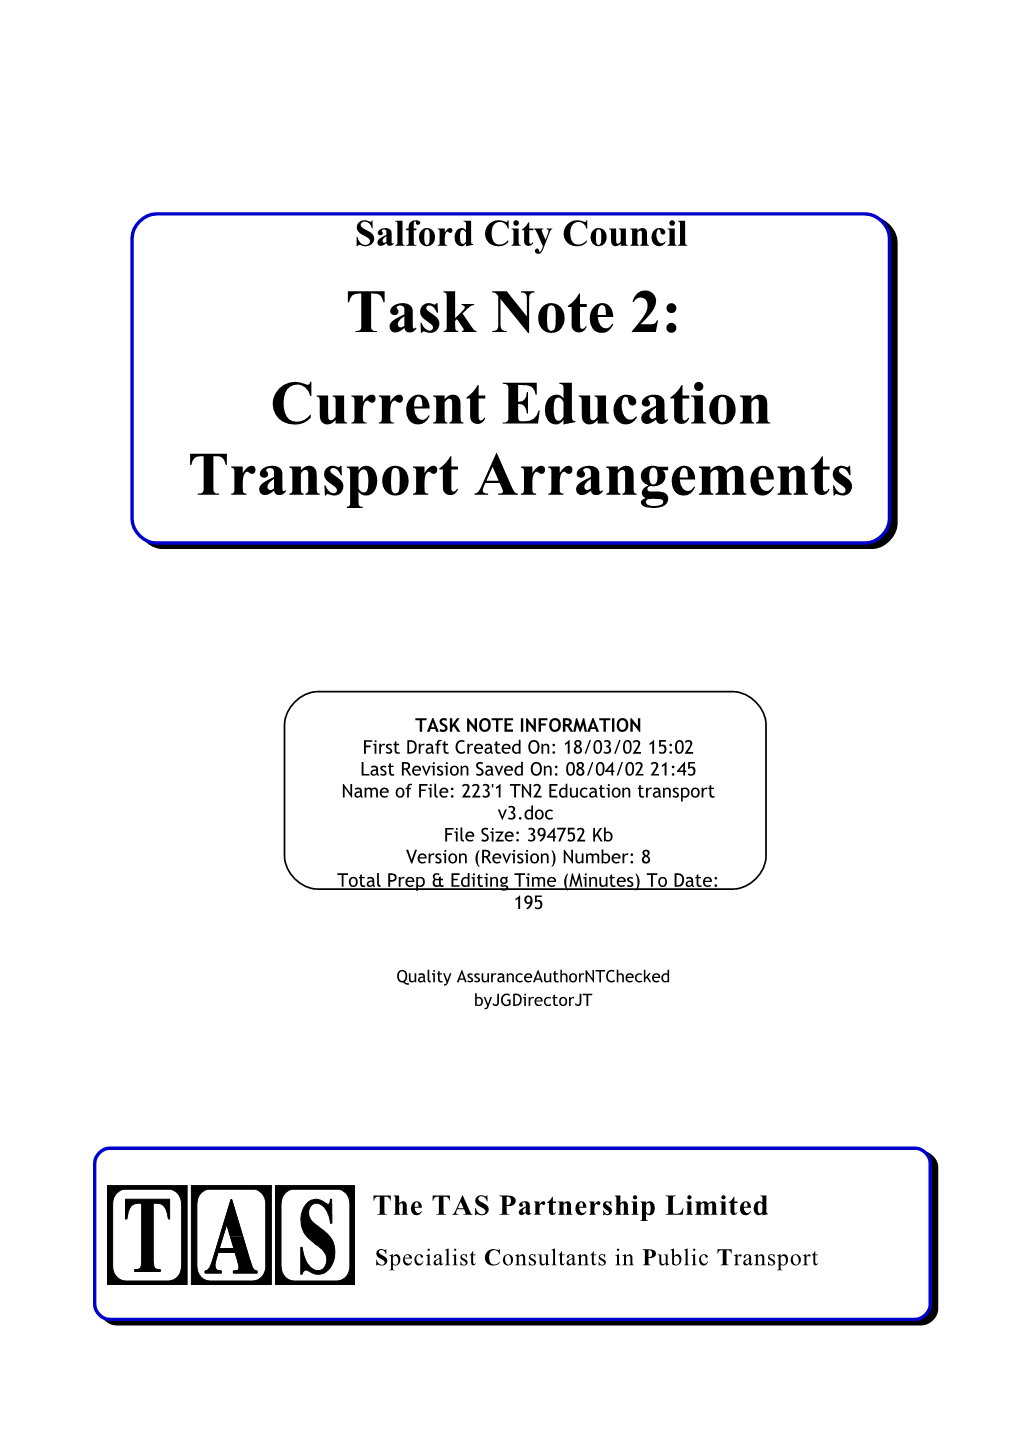 Salford City Council: Task Note 2: Current Education Transport Arrangements